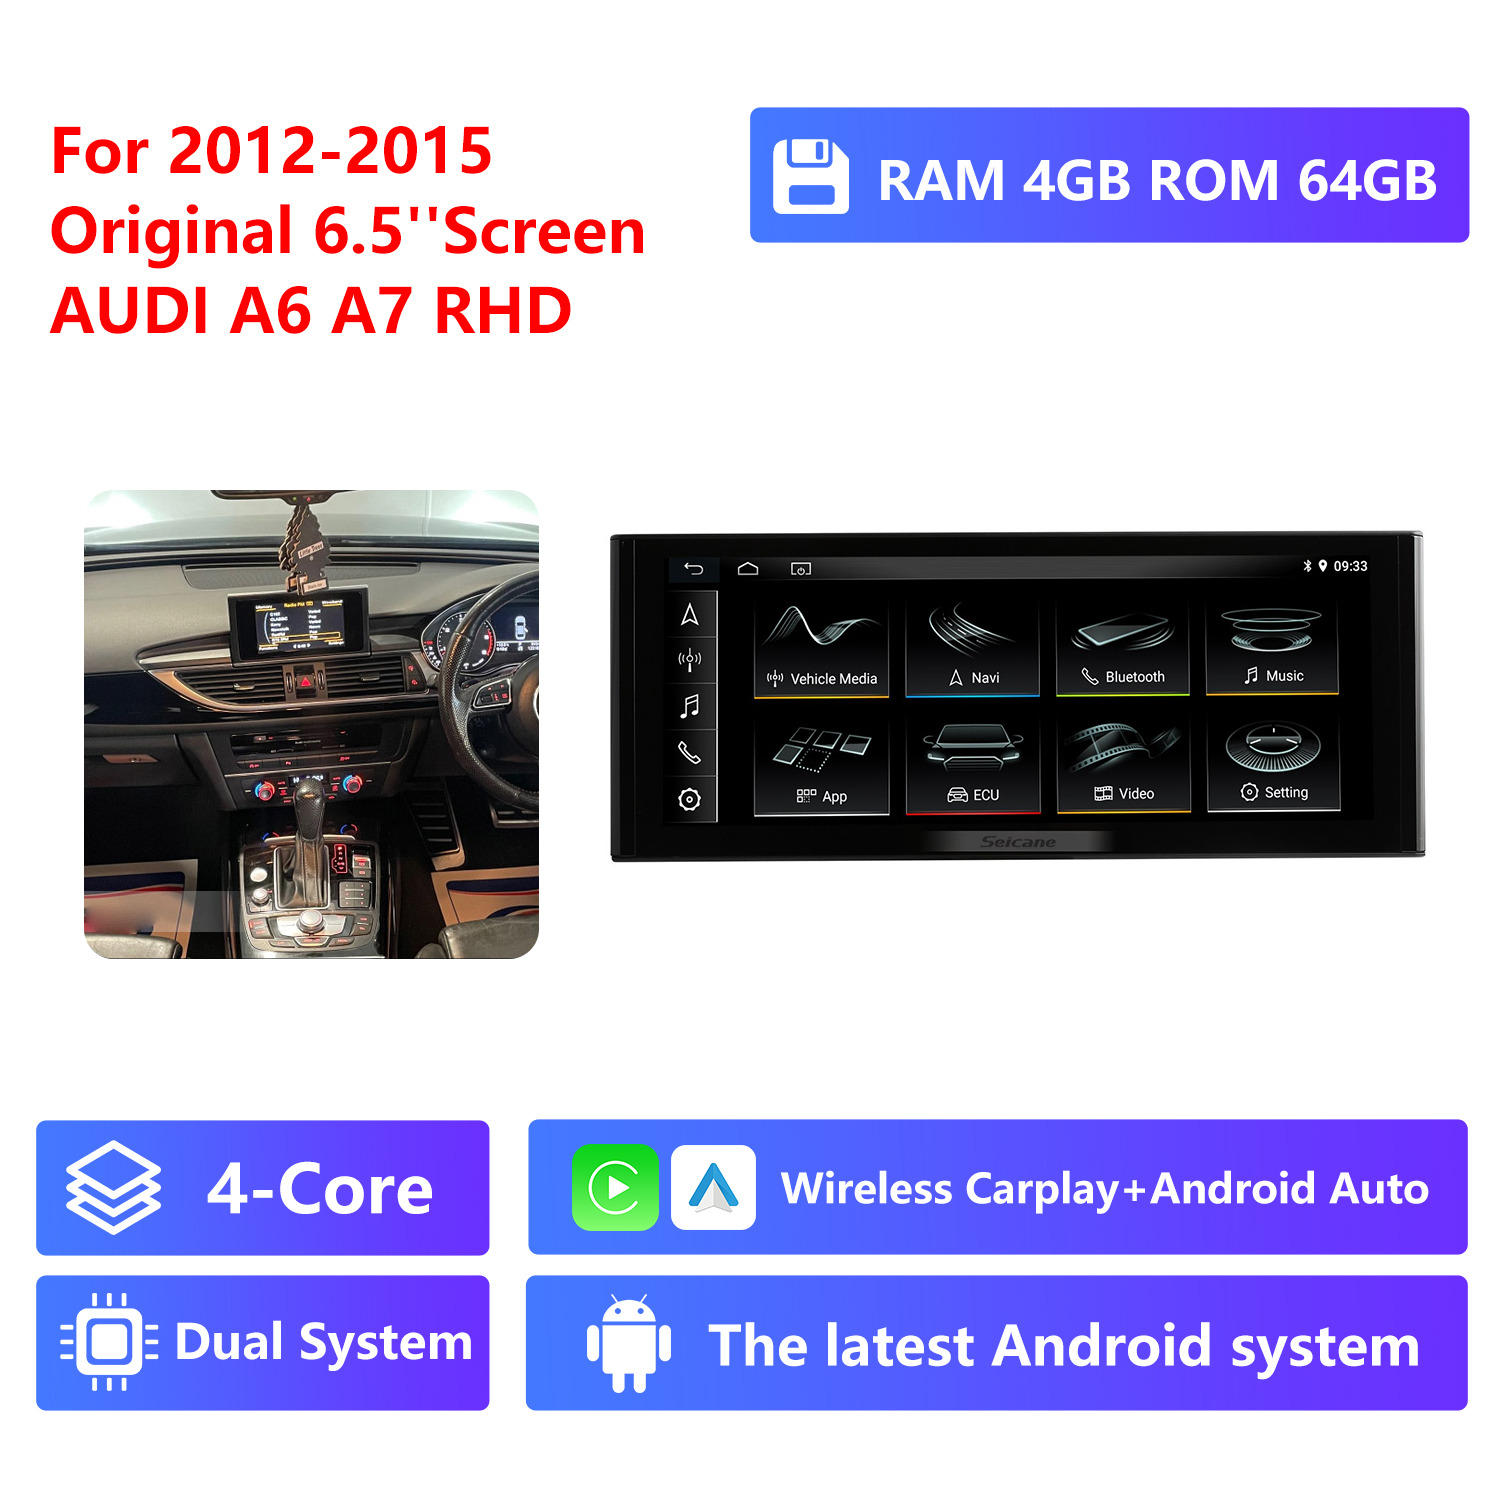 4-Core RAM 4G ROM 64G,2012-2015, Original 6.5"Screen,RHD